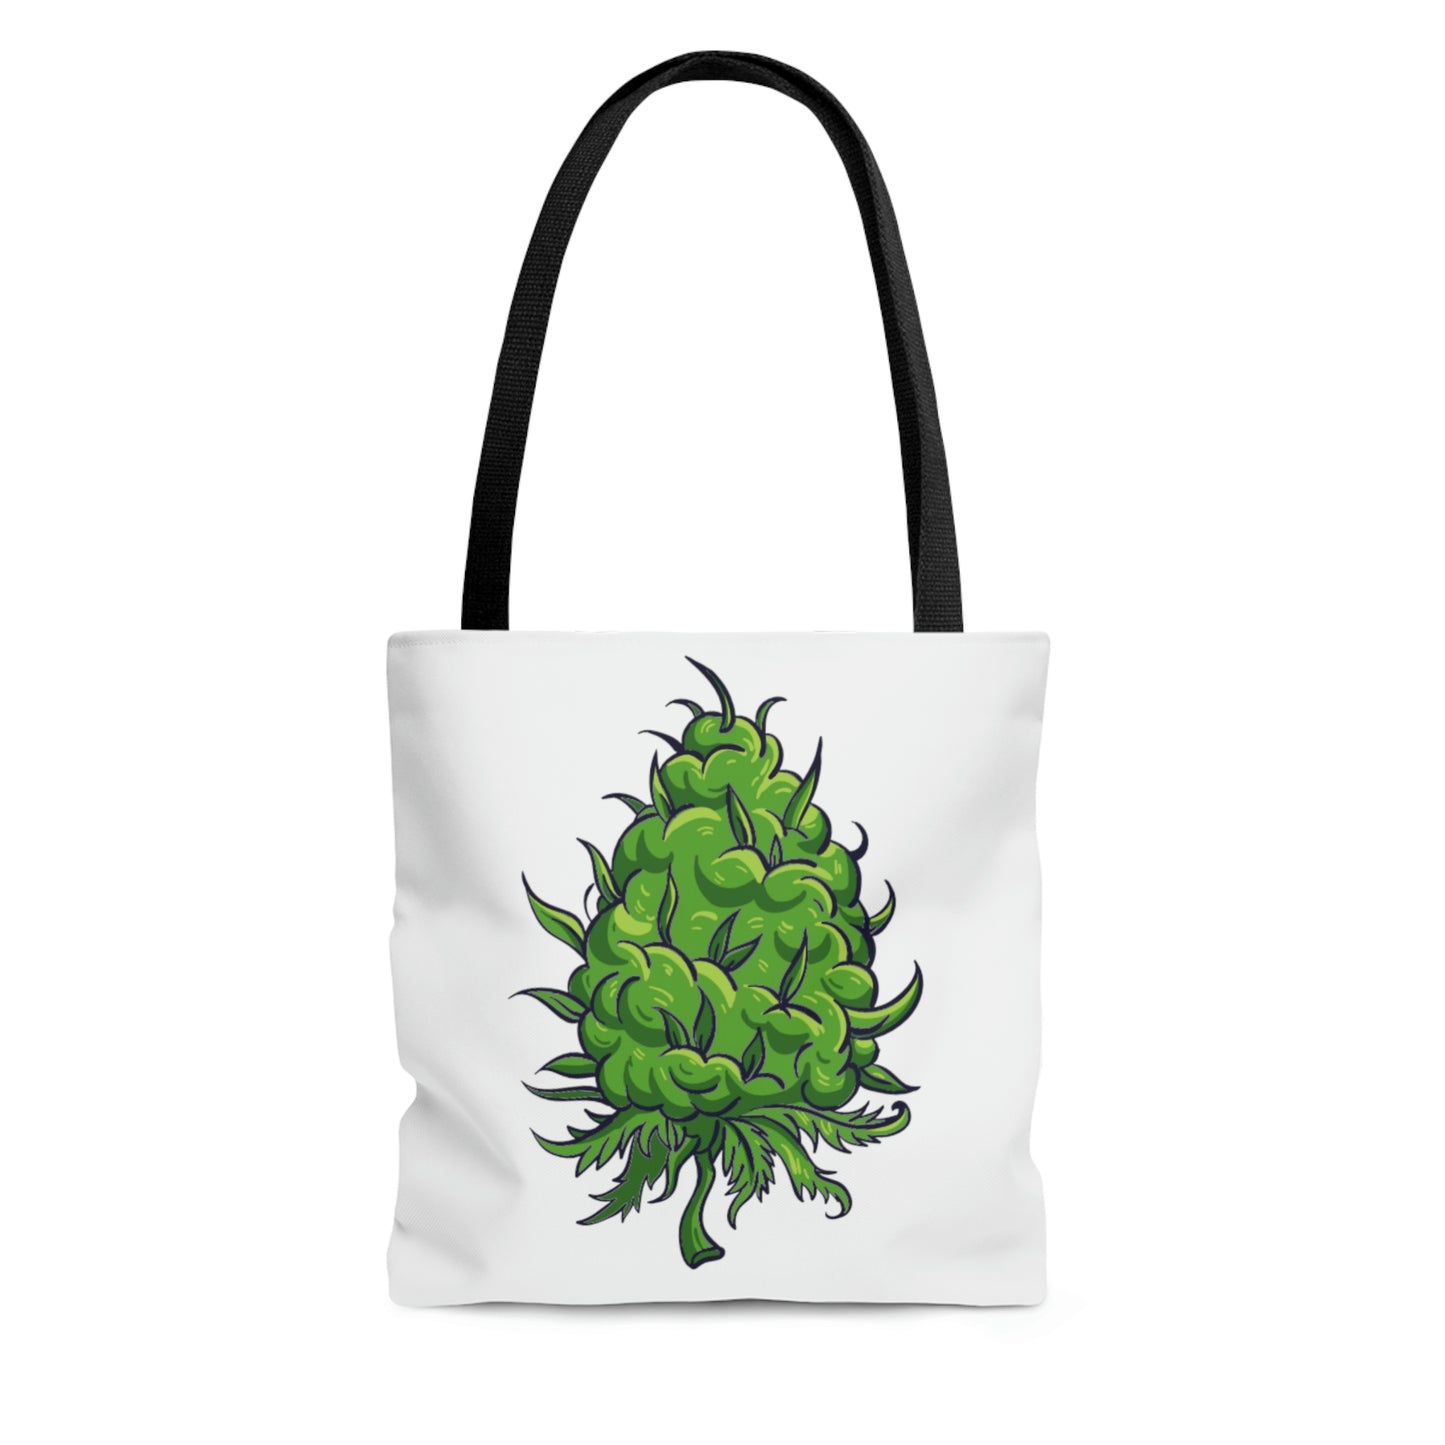 All white Big Green Cannabis Nug Tote Bag with black handle